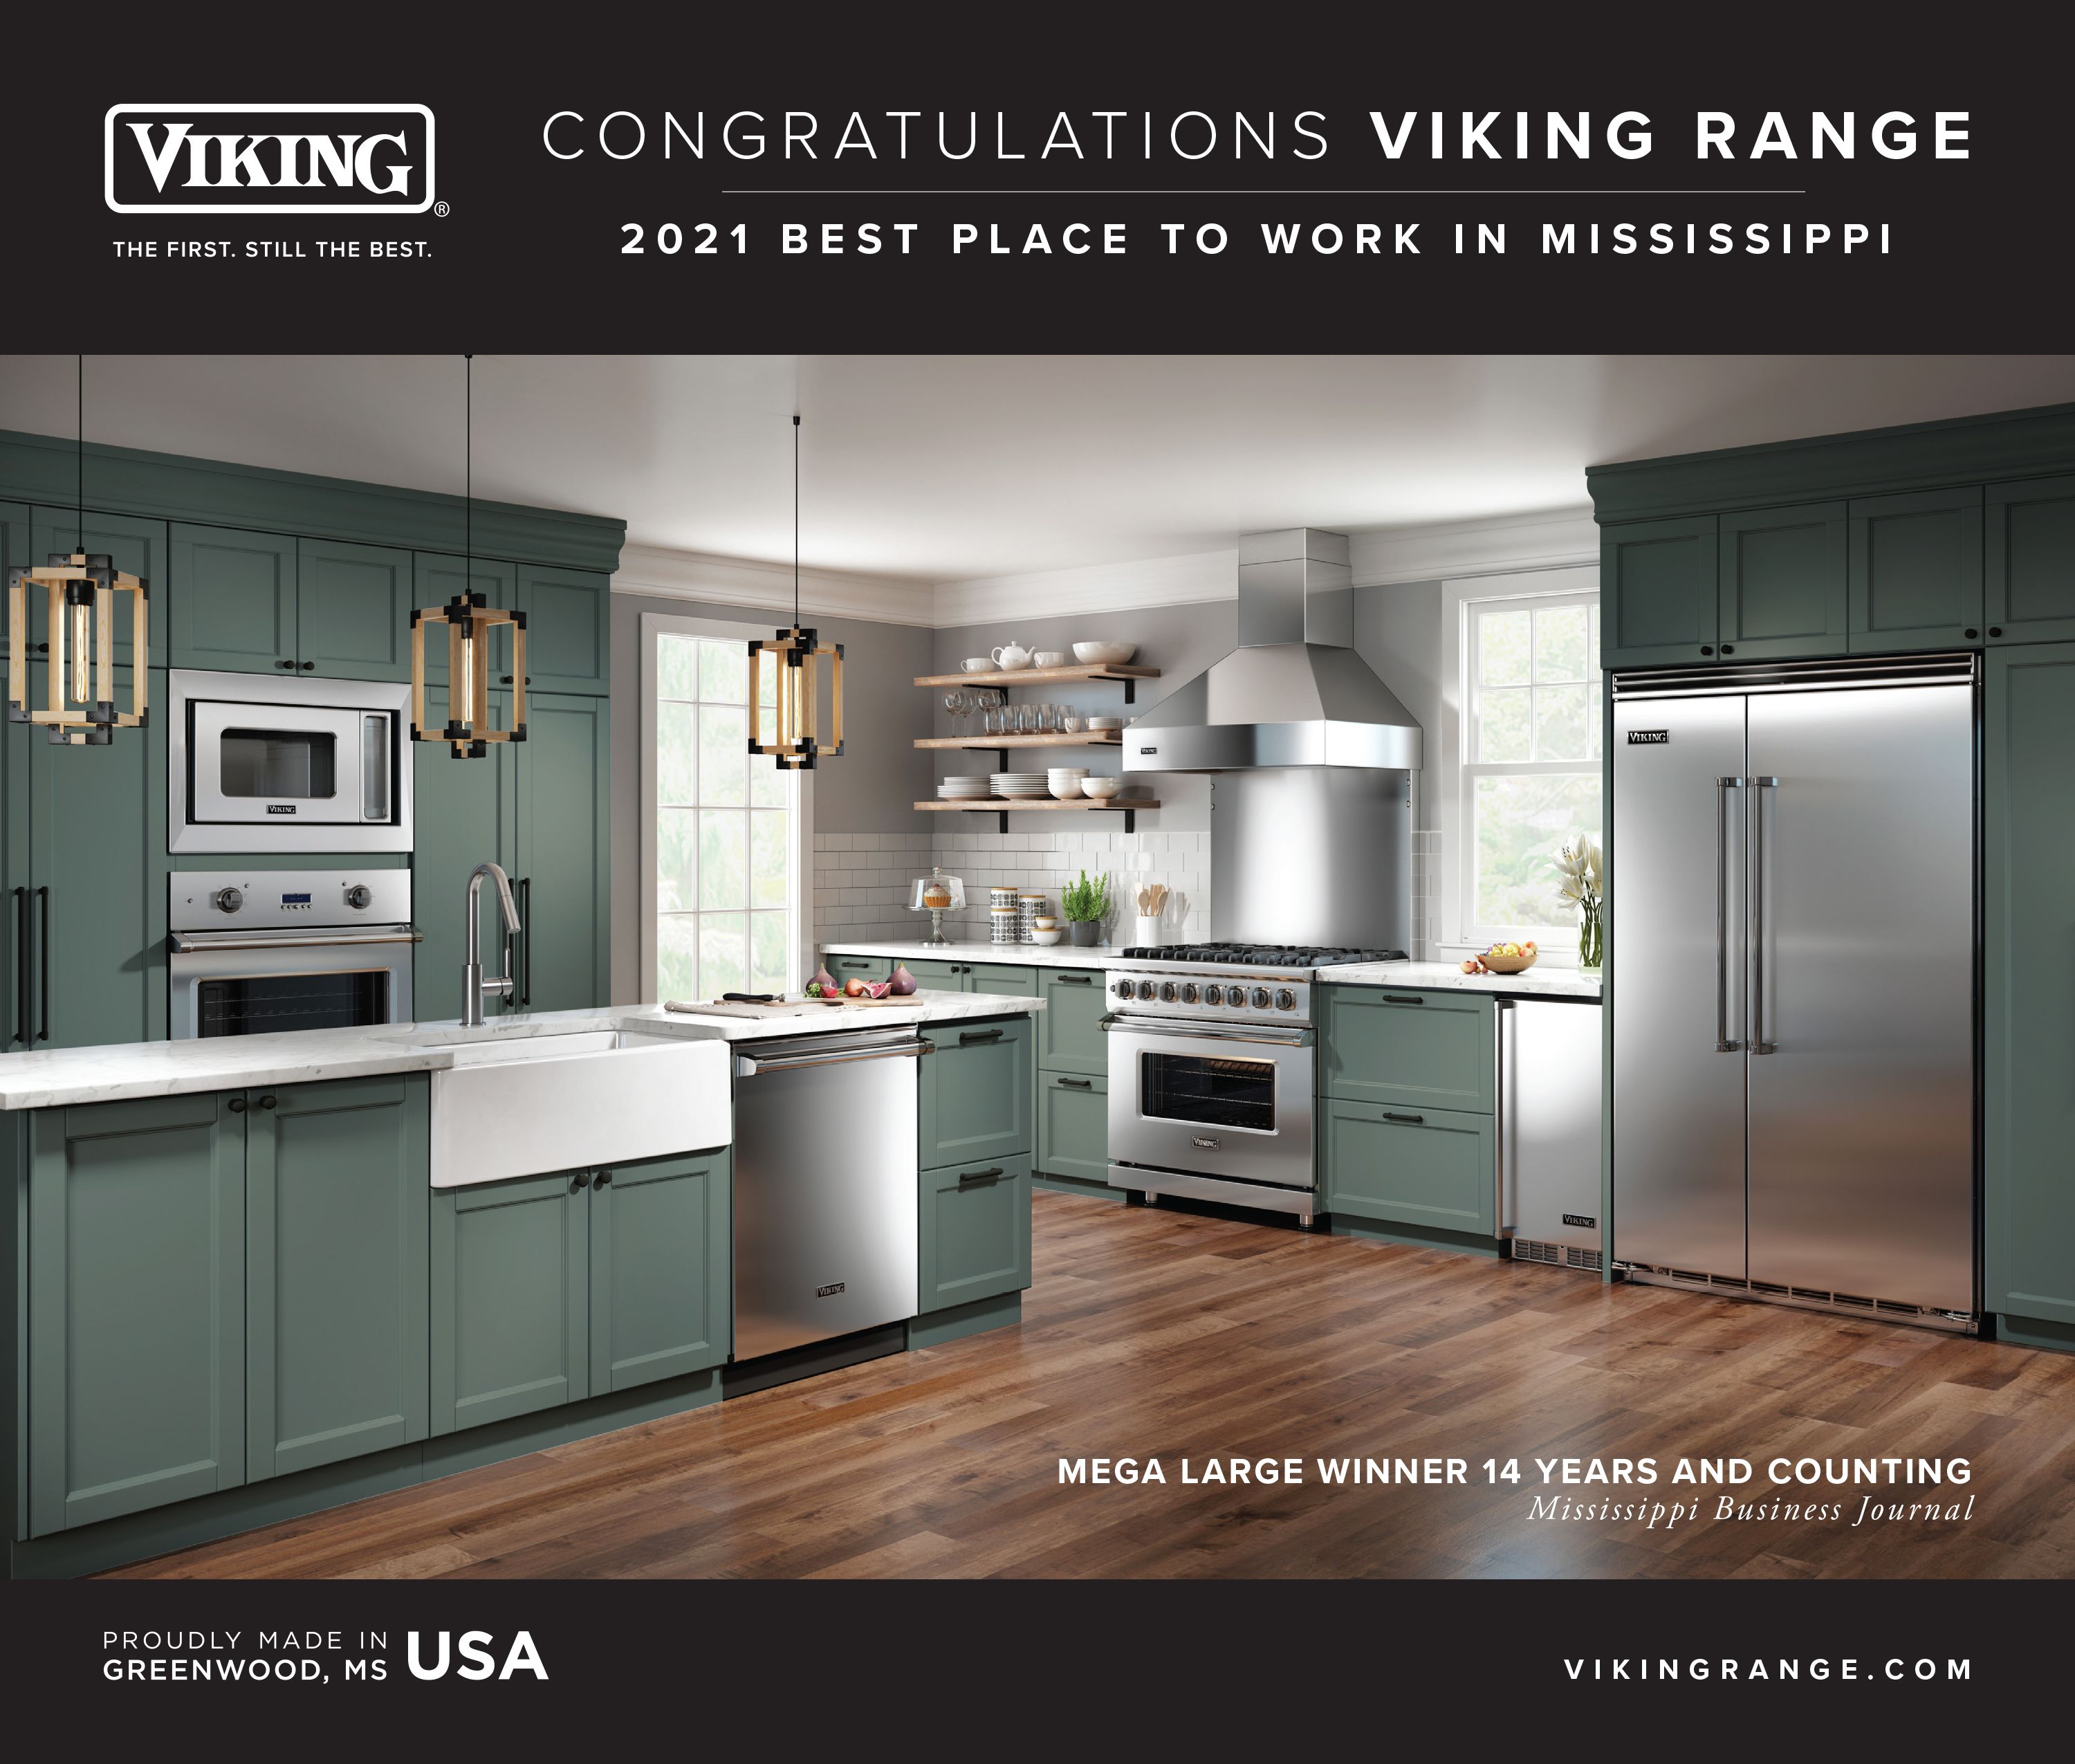 Viking Kitchen Gallery - Viking Range, LLC